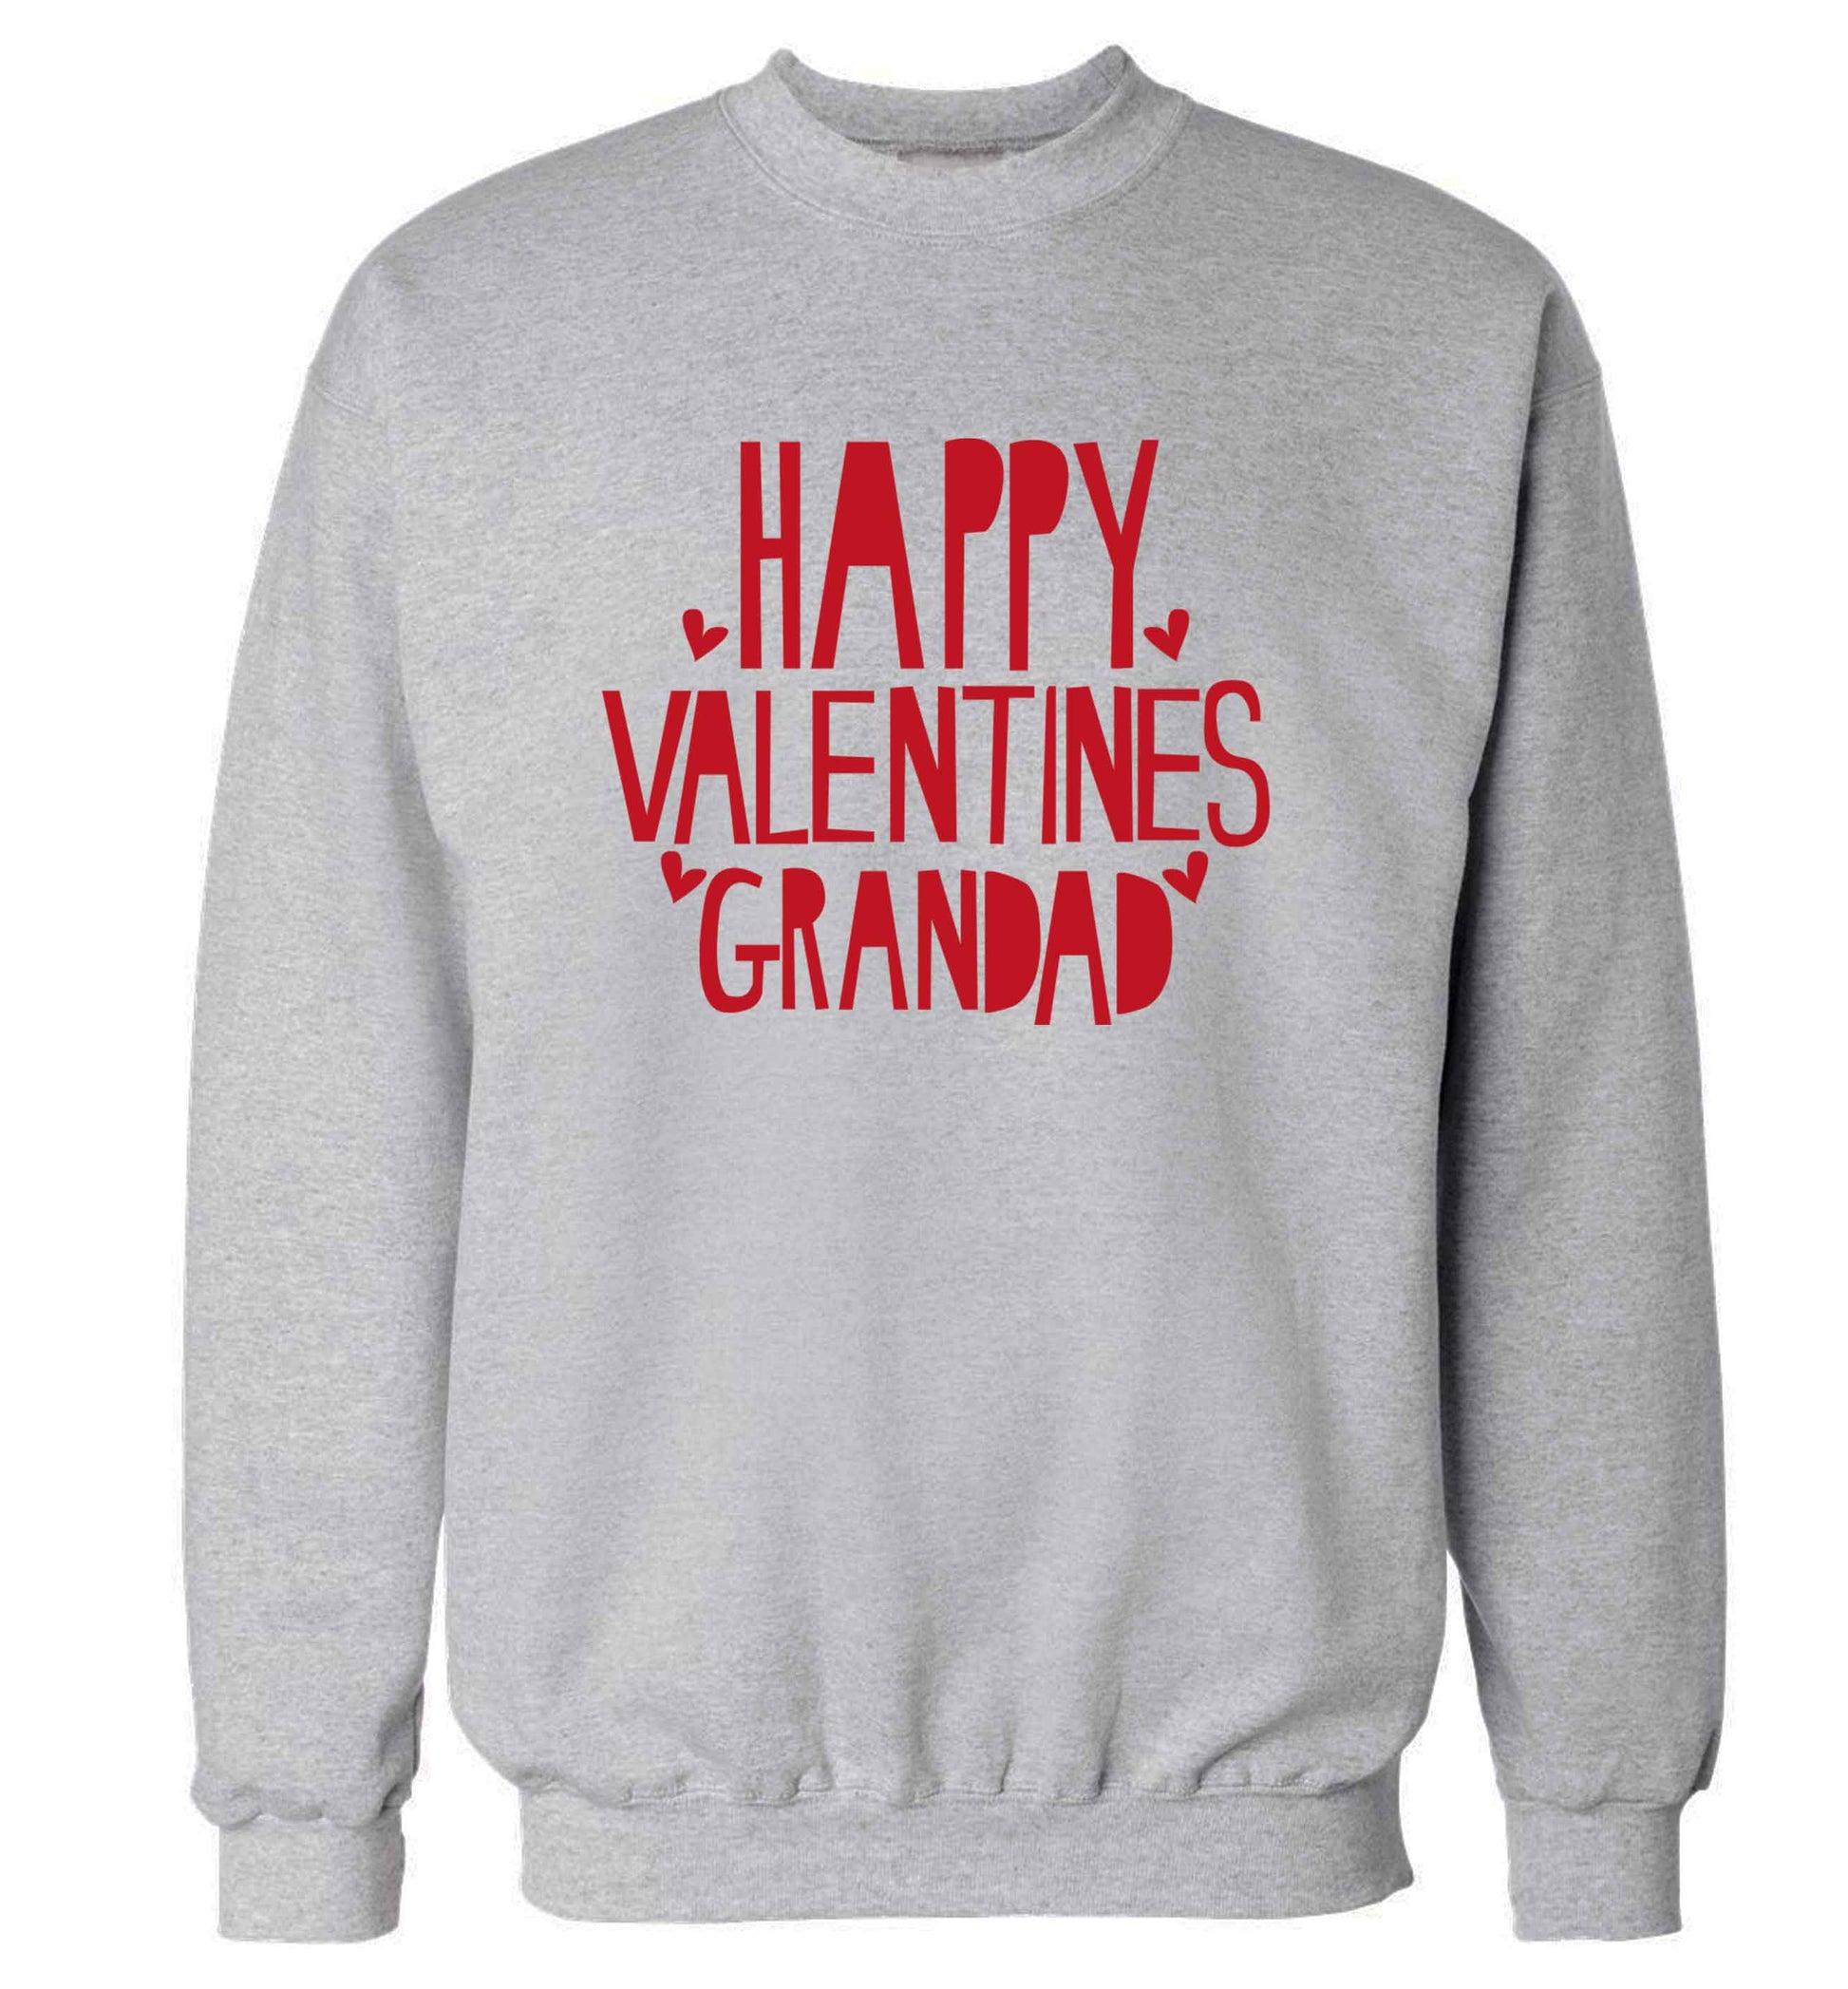 Happy valentines grandad adult's unisex grey sweater 2XL